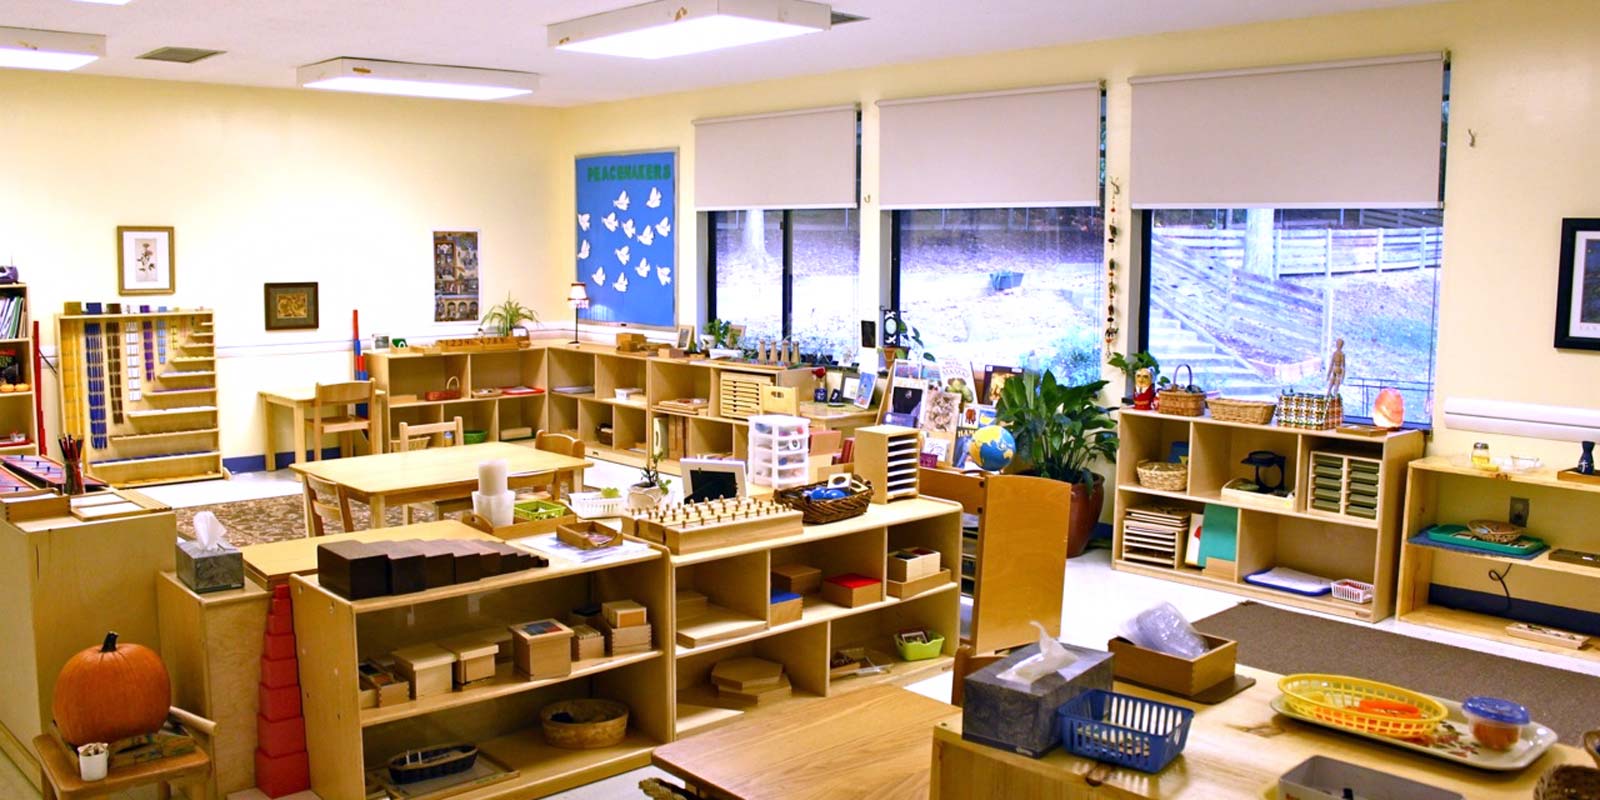 Renaissance Montessori classroom